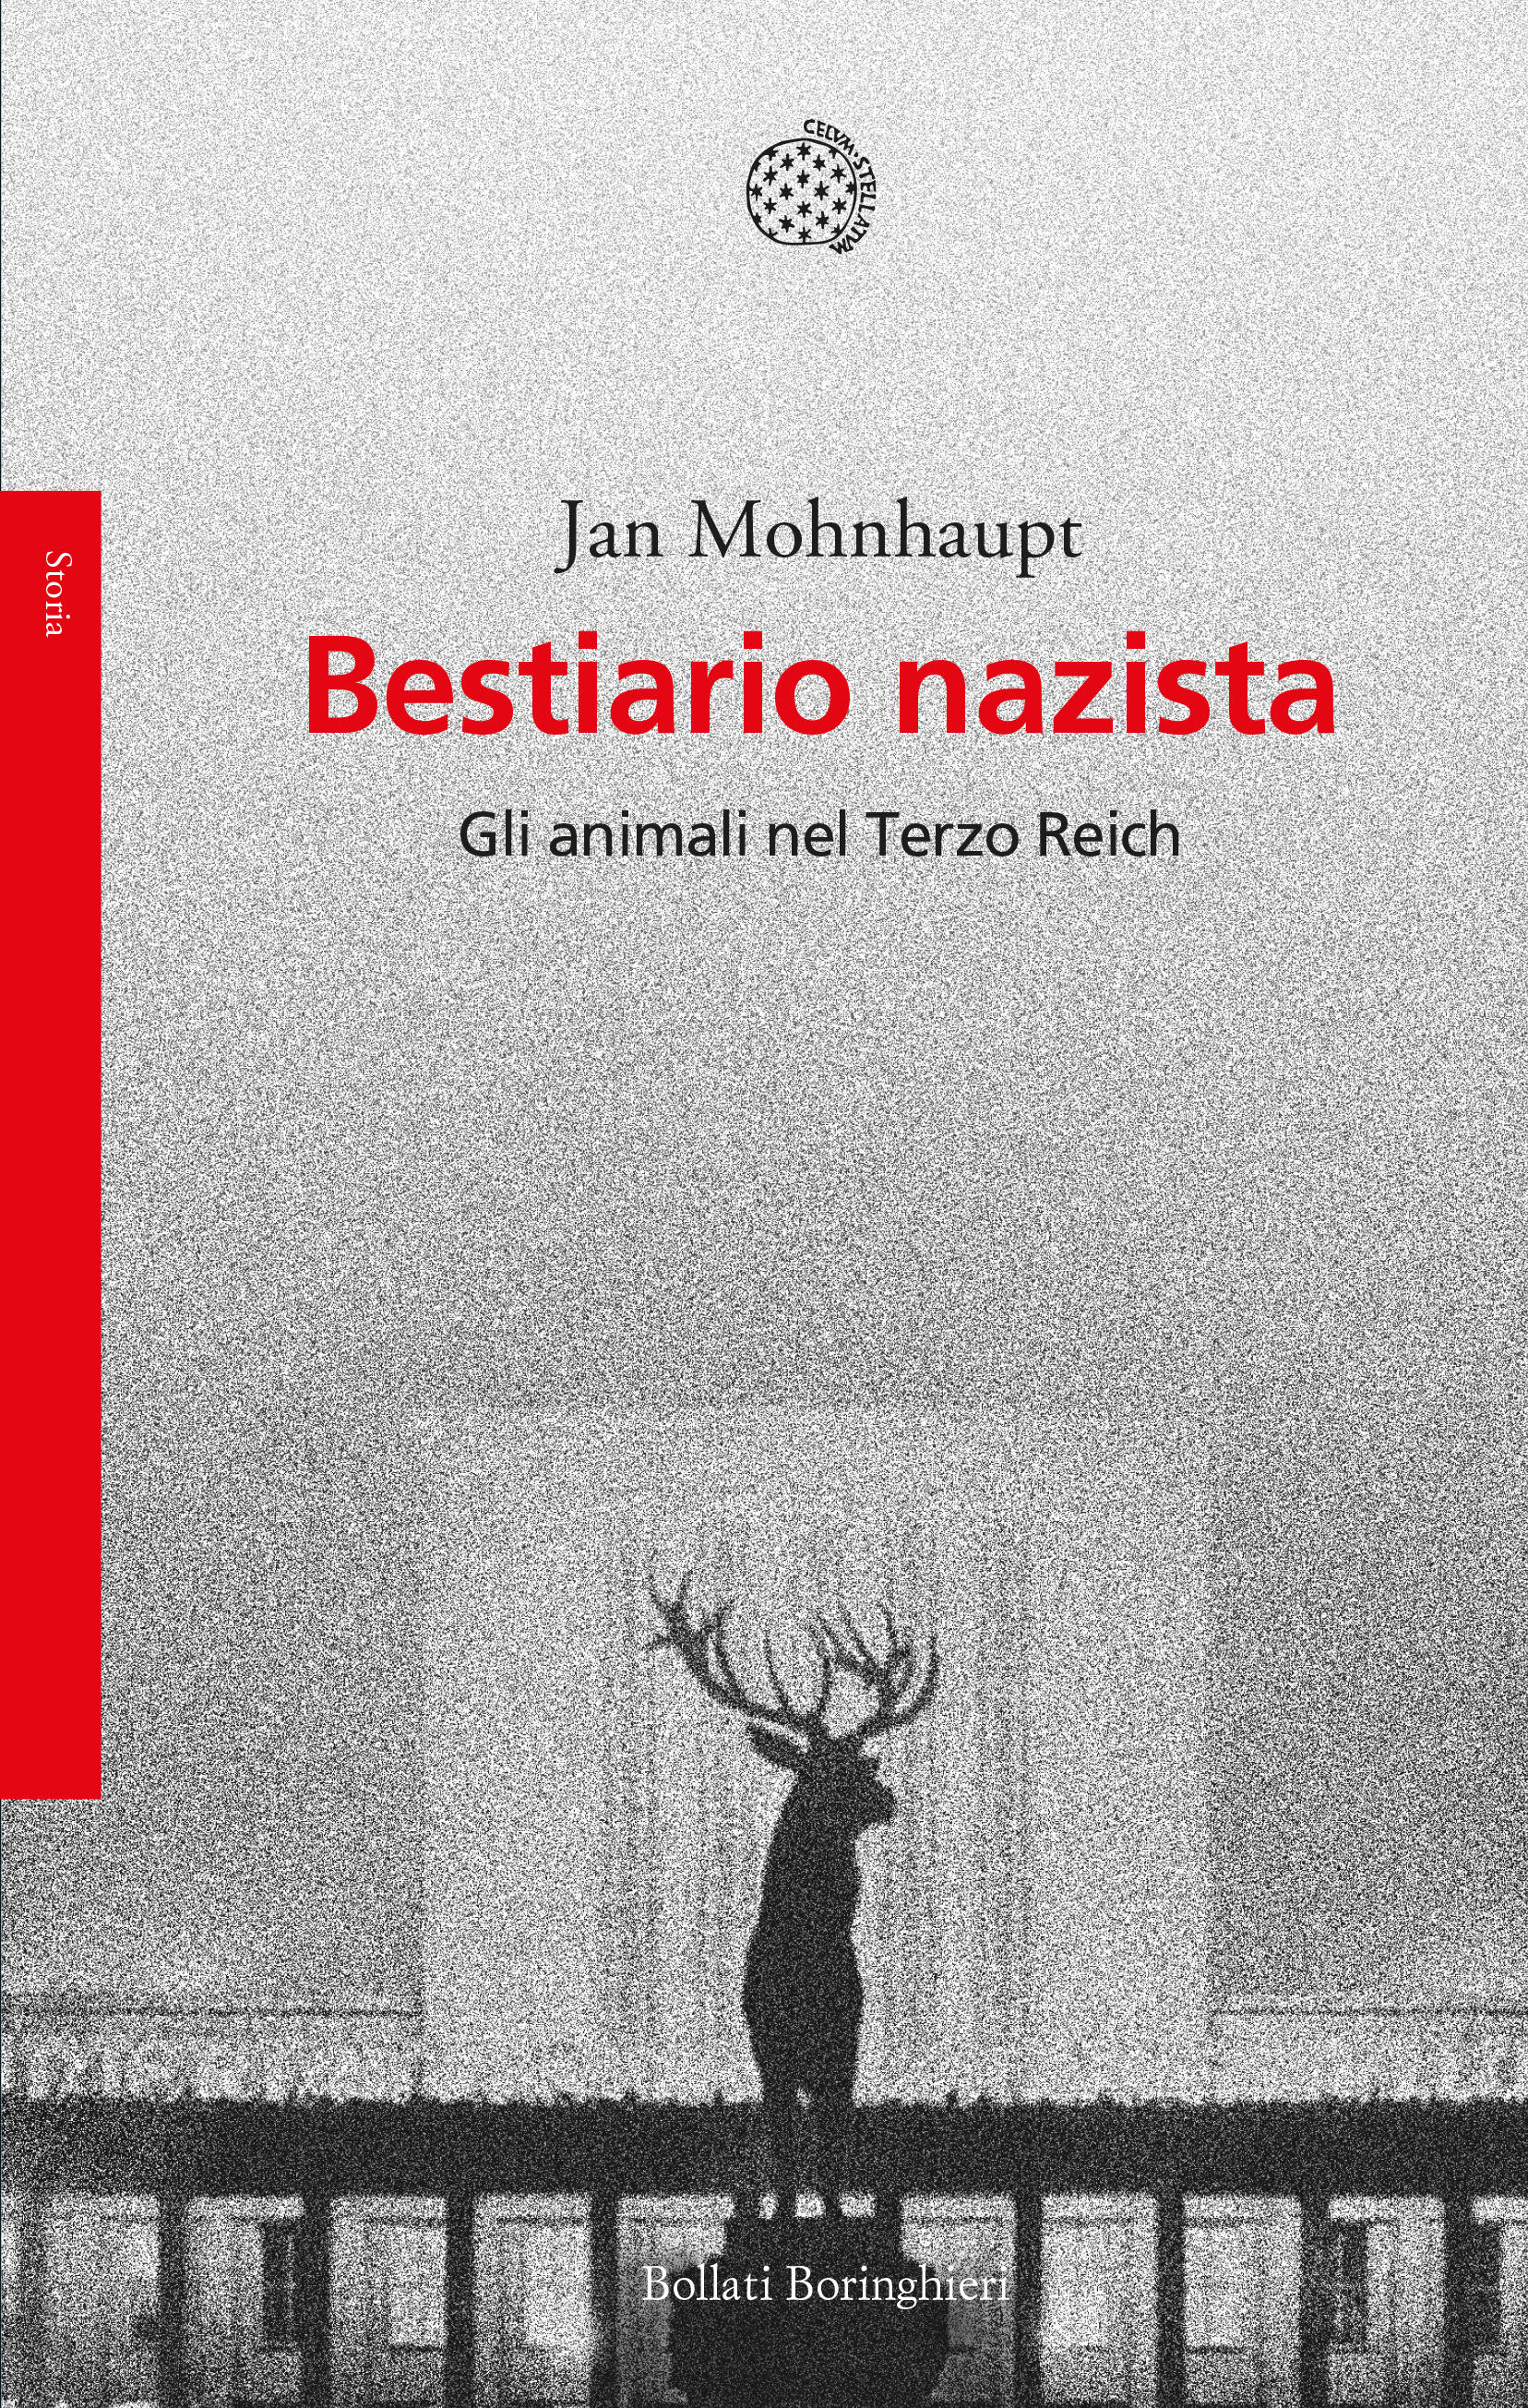 Bestiario nazista - Bollati Boringhieri